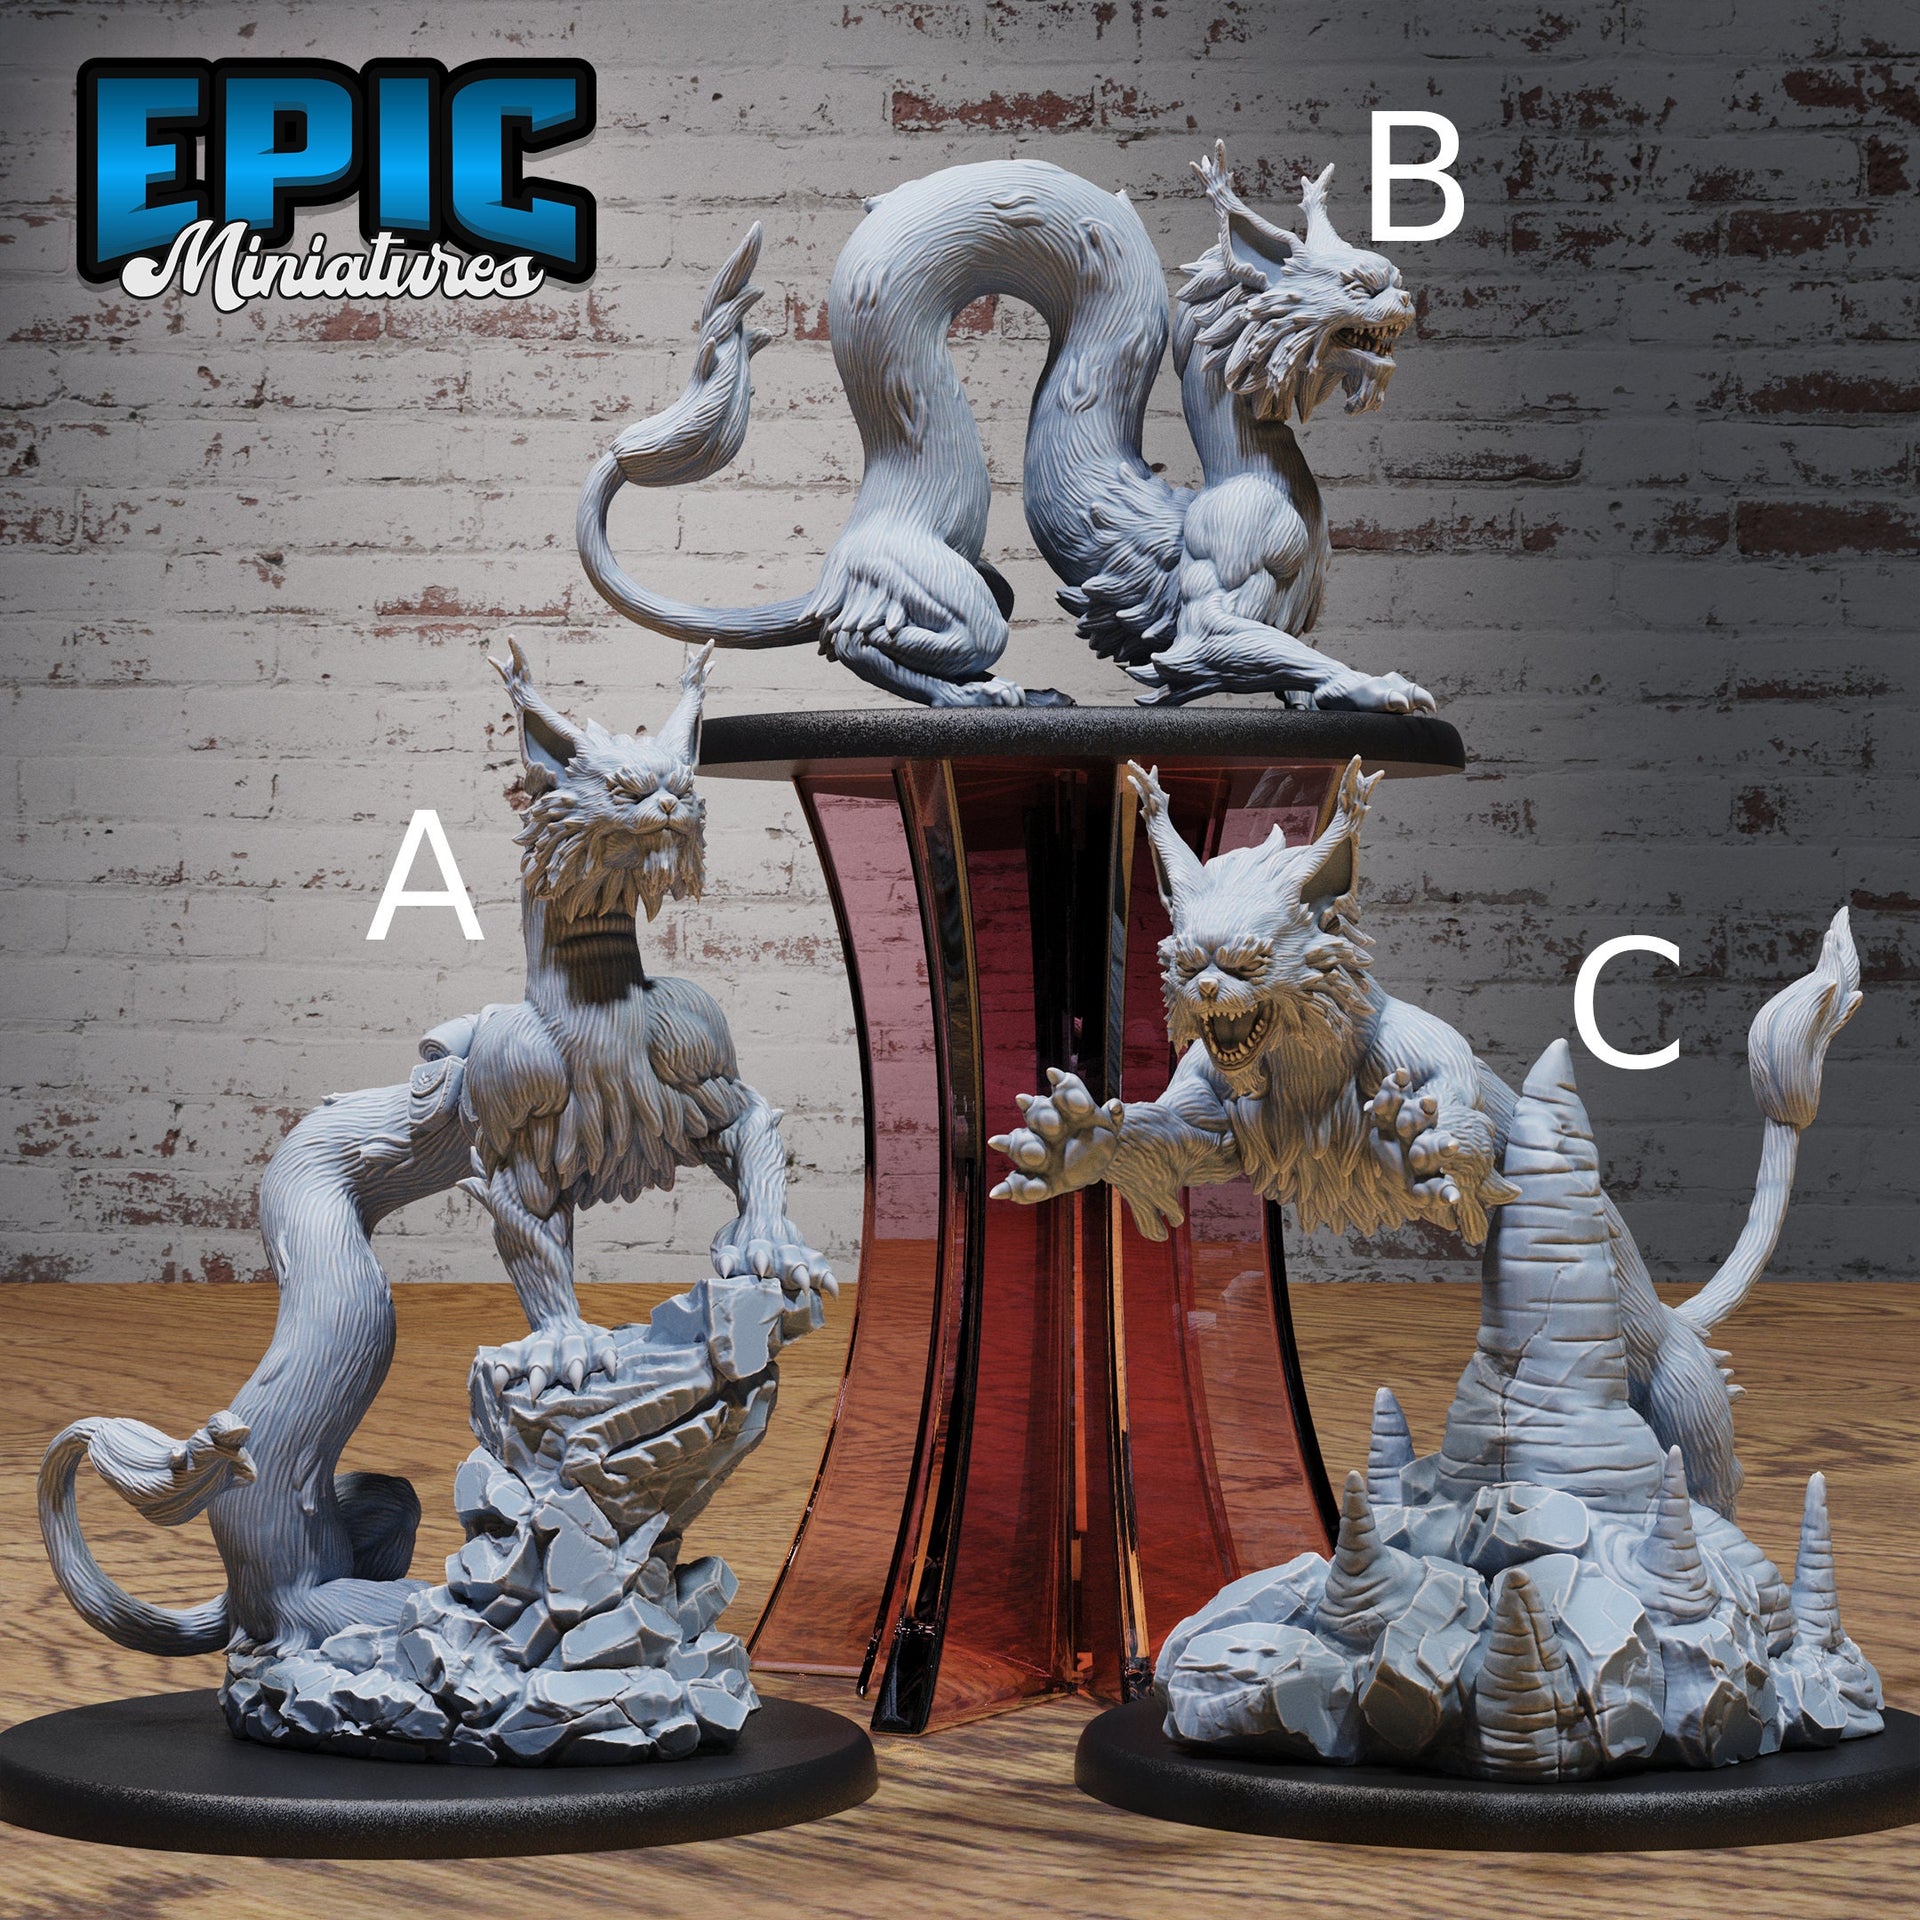 Long Cat Dragon - Epic Miniatures | Ninth Age | 32mm |Iron Fist Tournament | Sepenmt | Snake